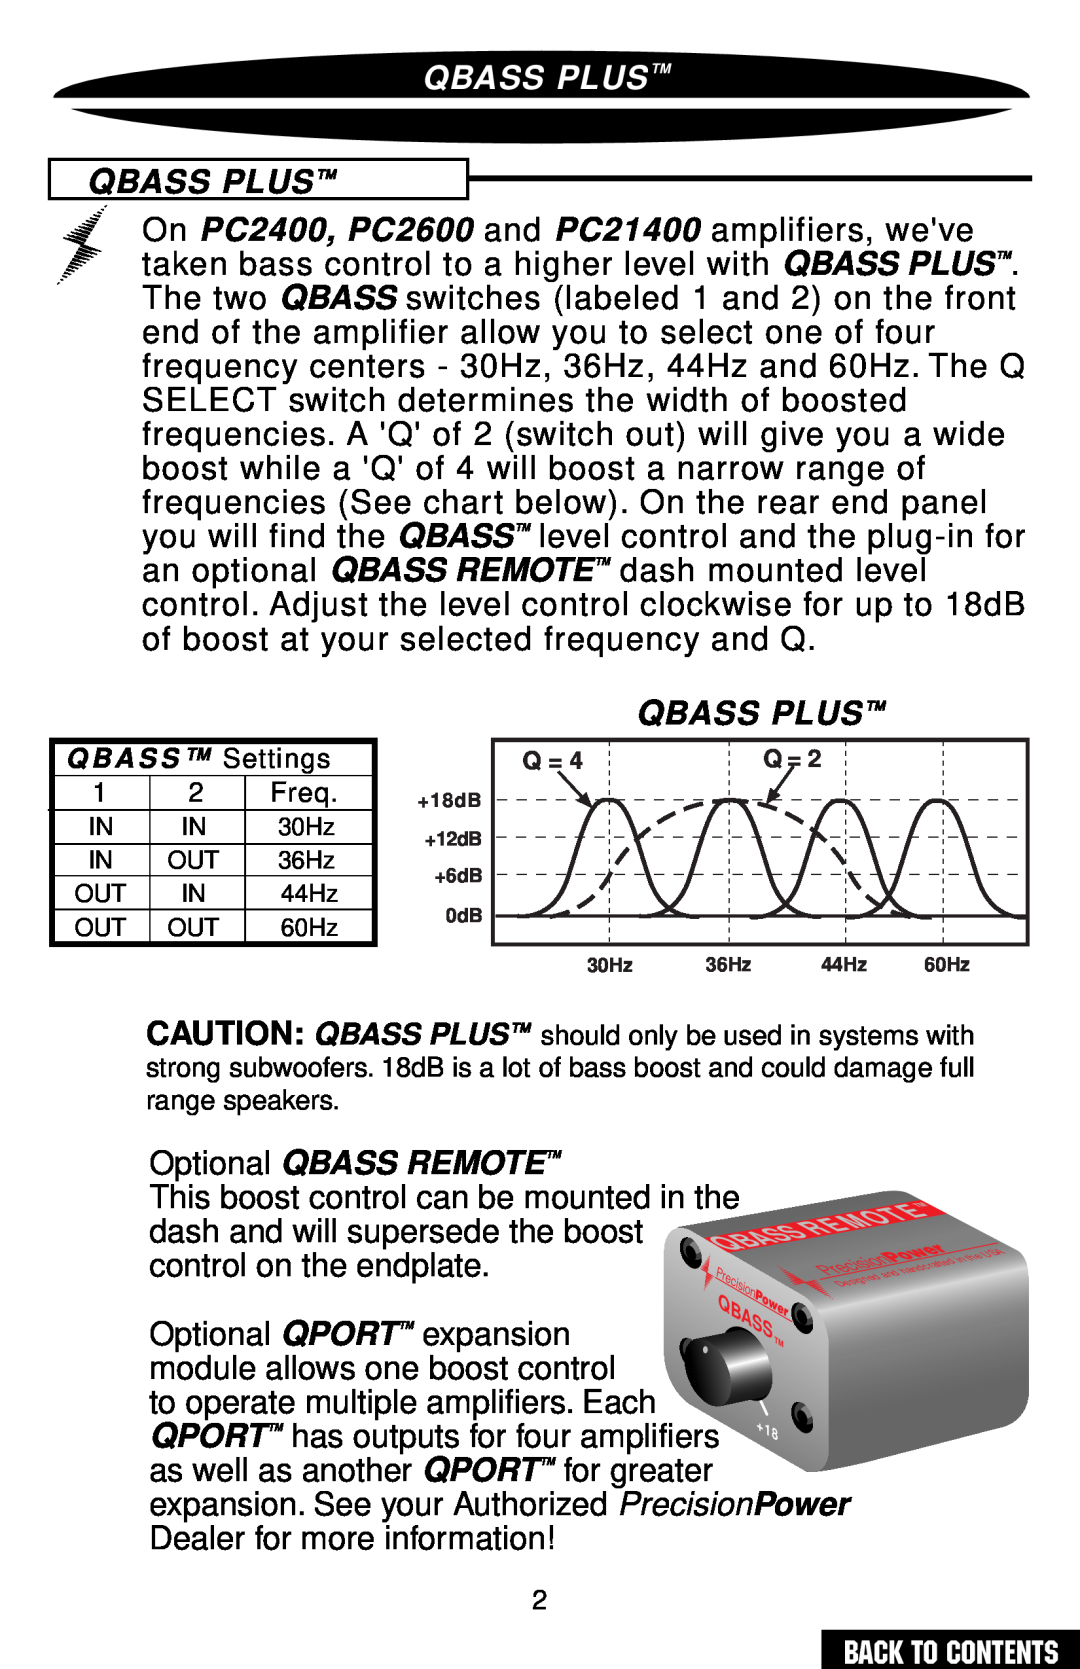 Precision Power PC2400 owner manual Qbass Plus, Optional QBASS REMOTE 